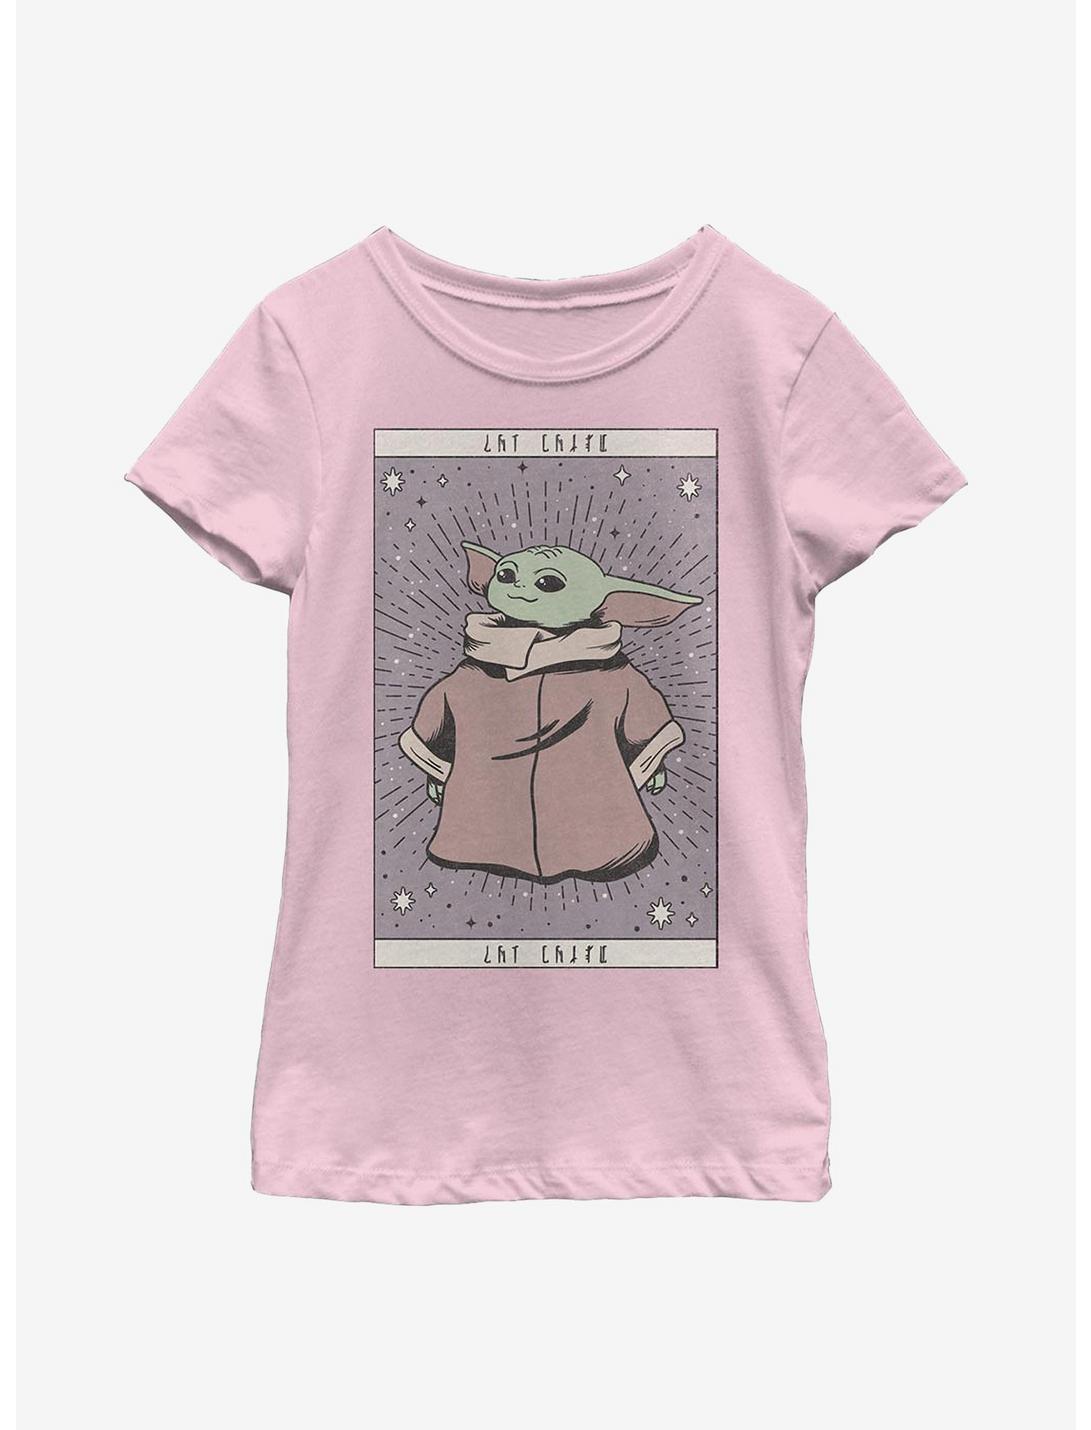 Star Wars The Mandalorian The Child Tarot Youth Girls T-Shirt, PINK, hi-res